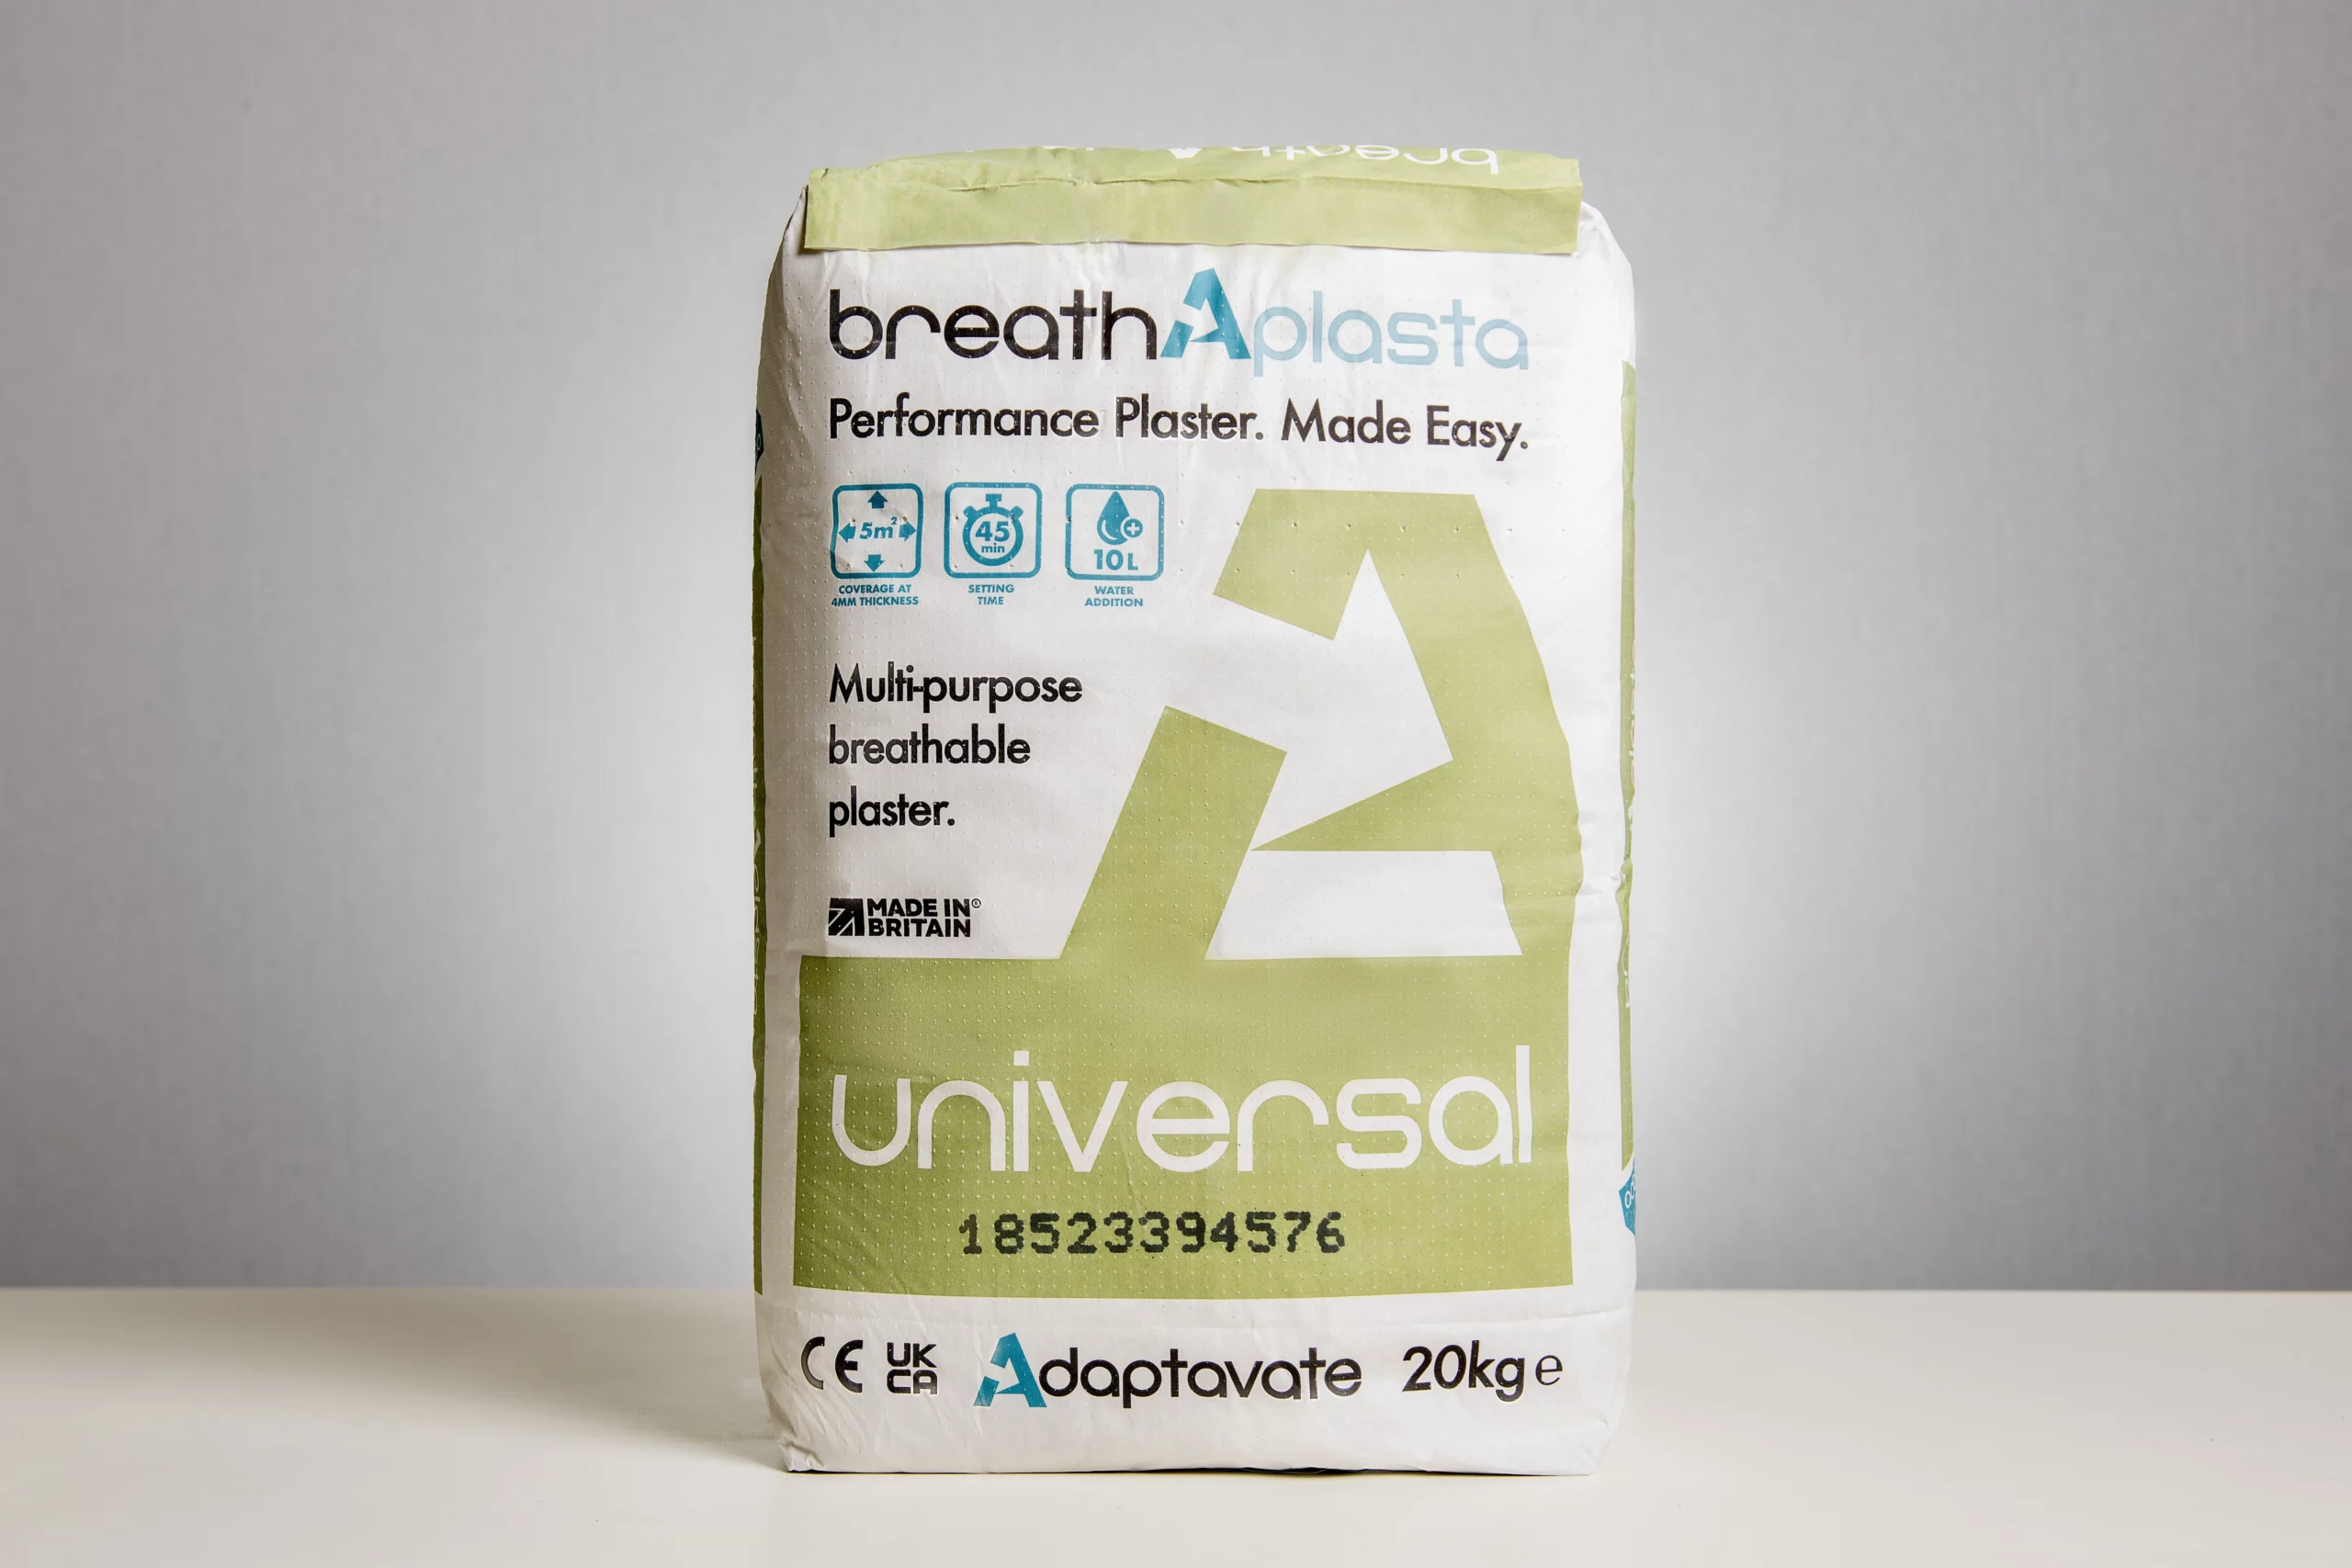 Breathaplasta: Natural Lime-Based Plaster for Enhanced Air Quality